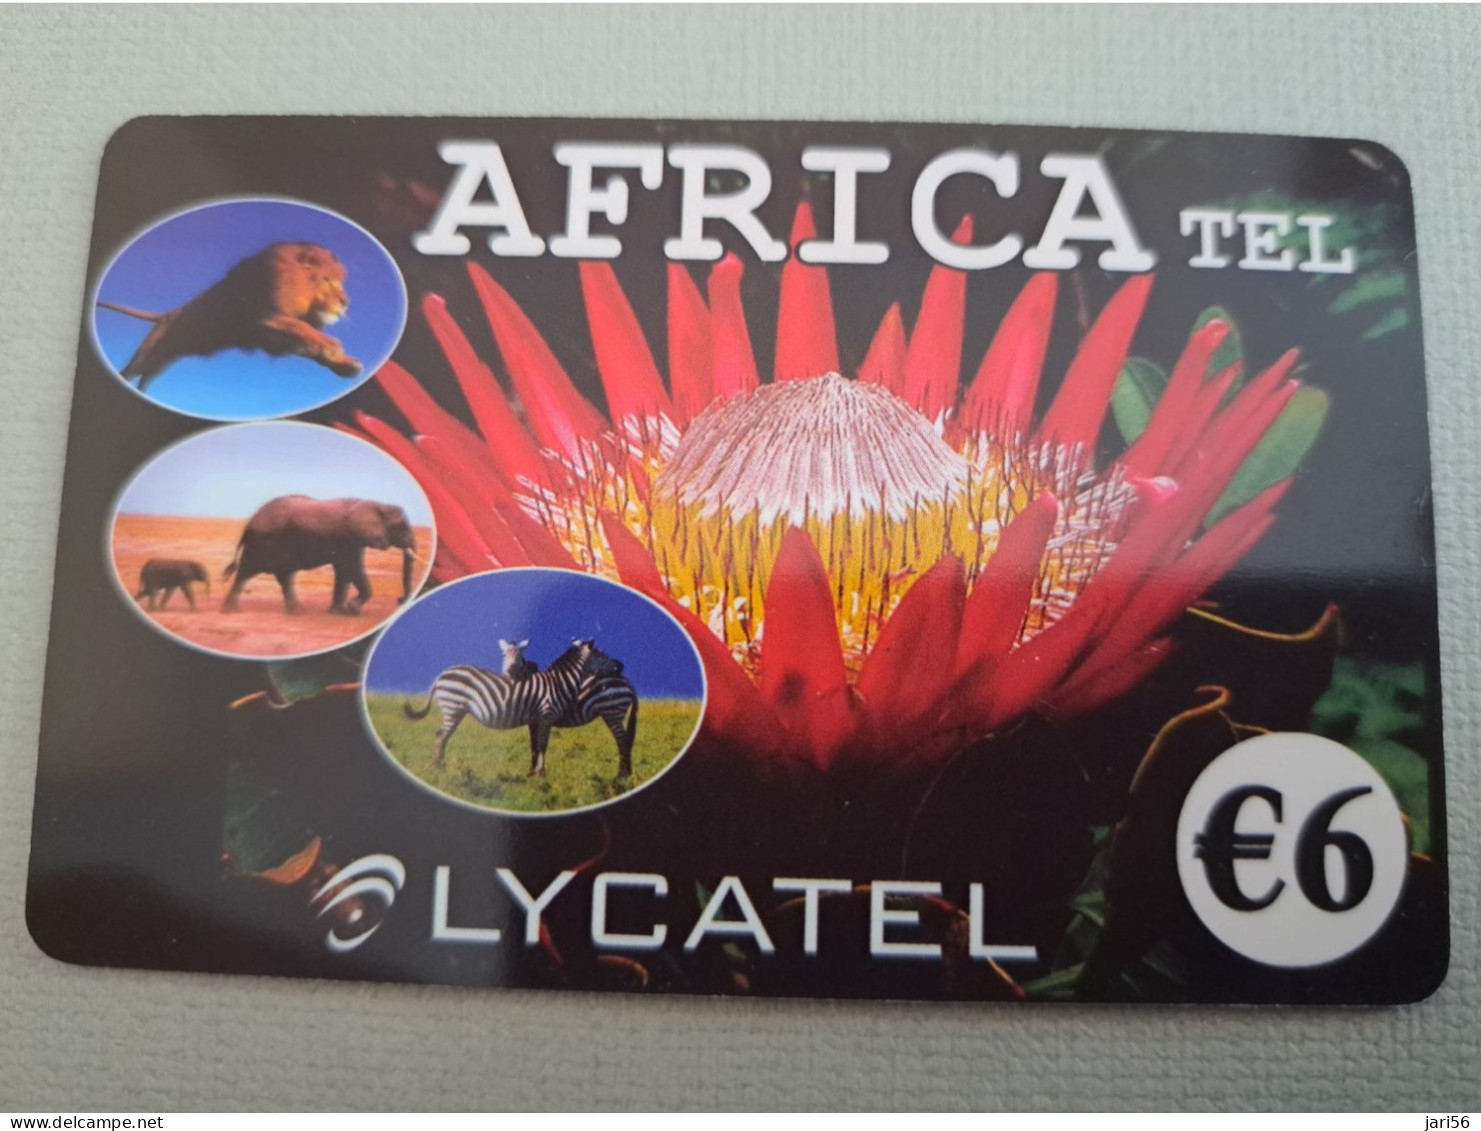 NETHERLANDS /  PREPAID / LYCATEL / AFRIKA / LION/ELEPHANT//ZEBRA/ FLOWER/  € 6,-  USED  ** 15247** - Private